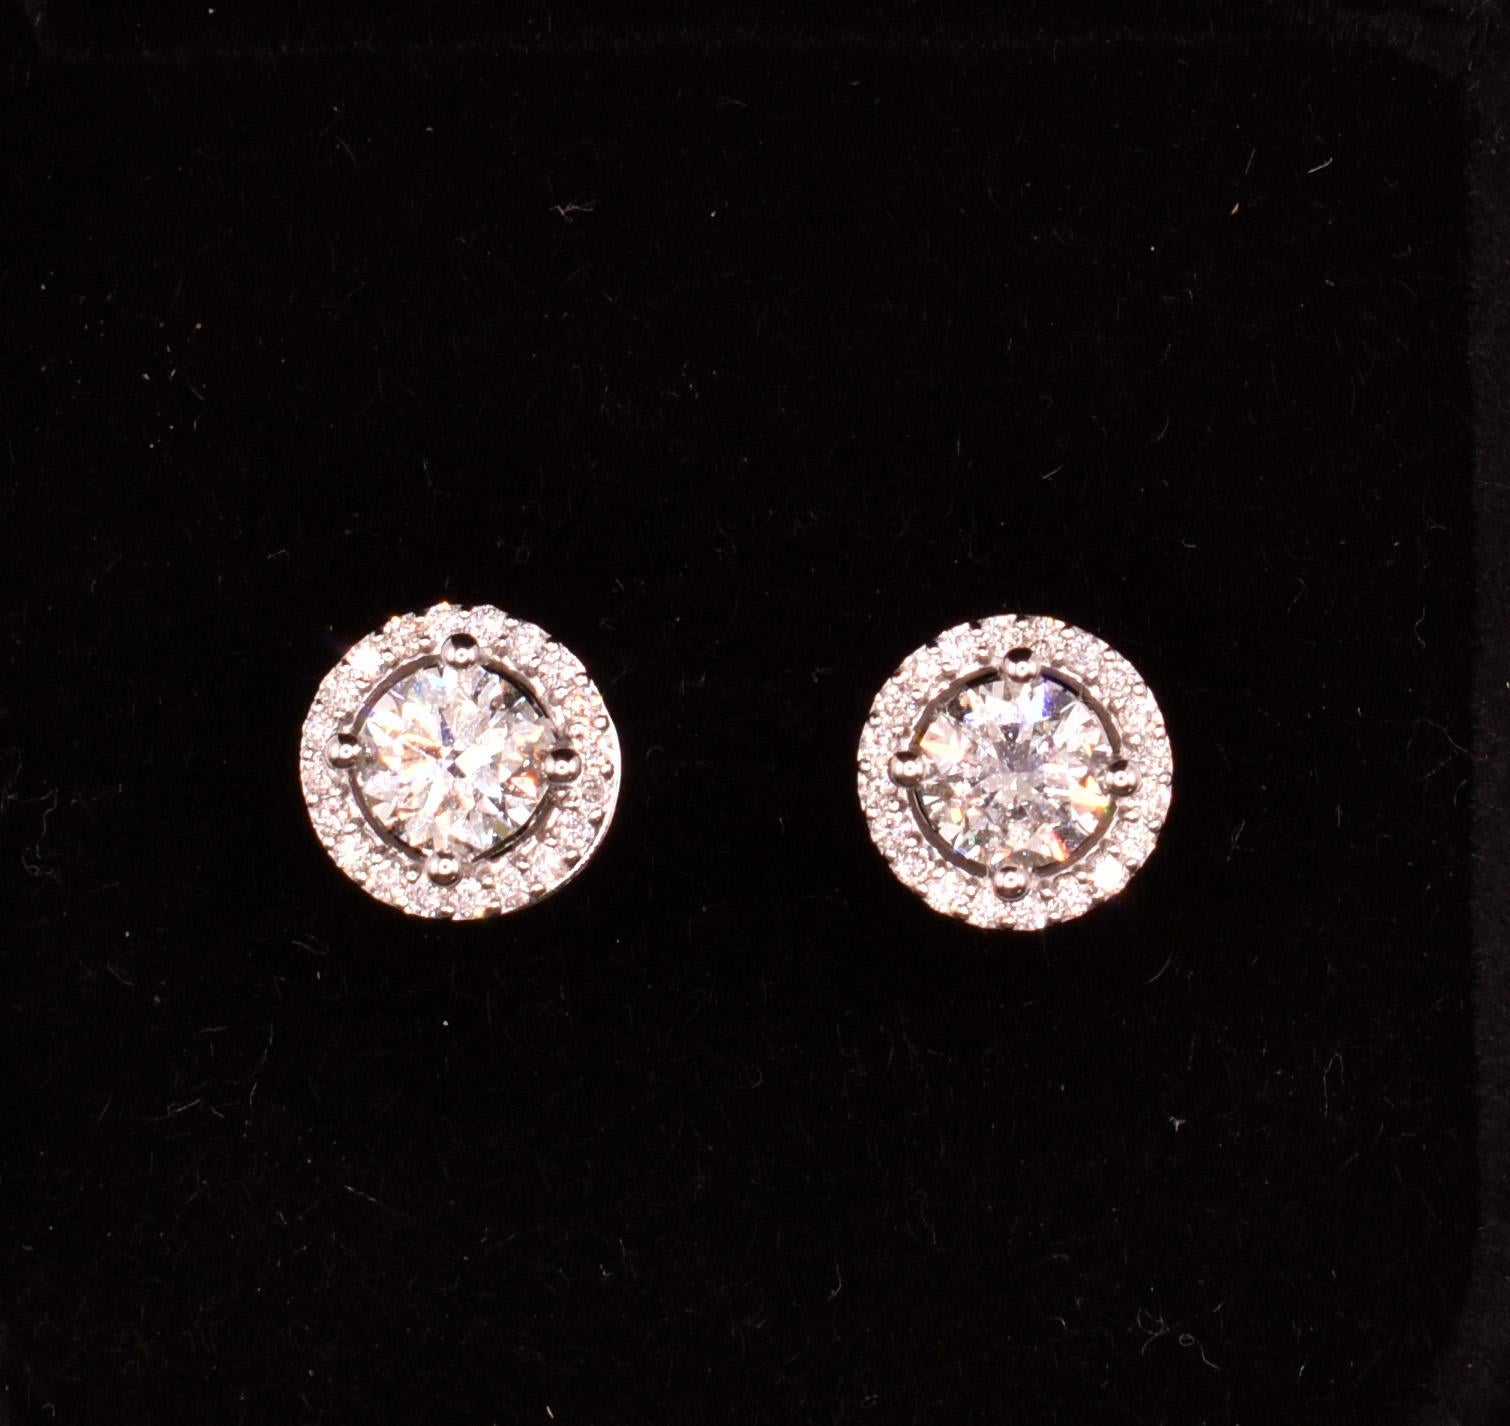 Pair of 18k White Gold 1.18 Carat Diamond Halo Stud Earrings For Sale 2